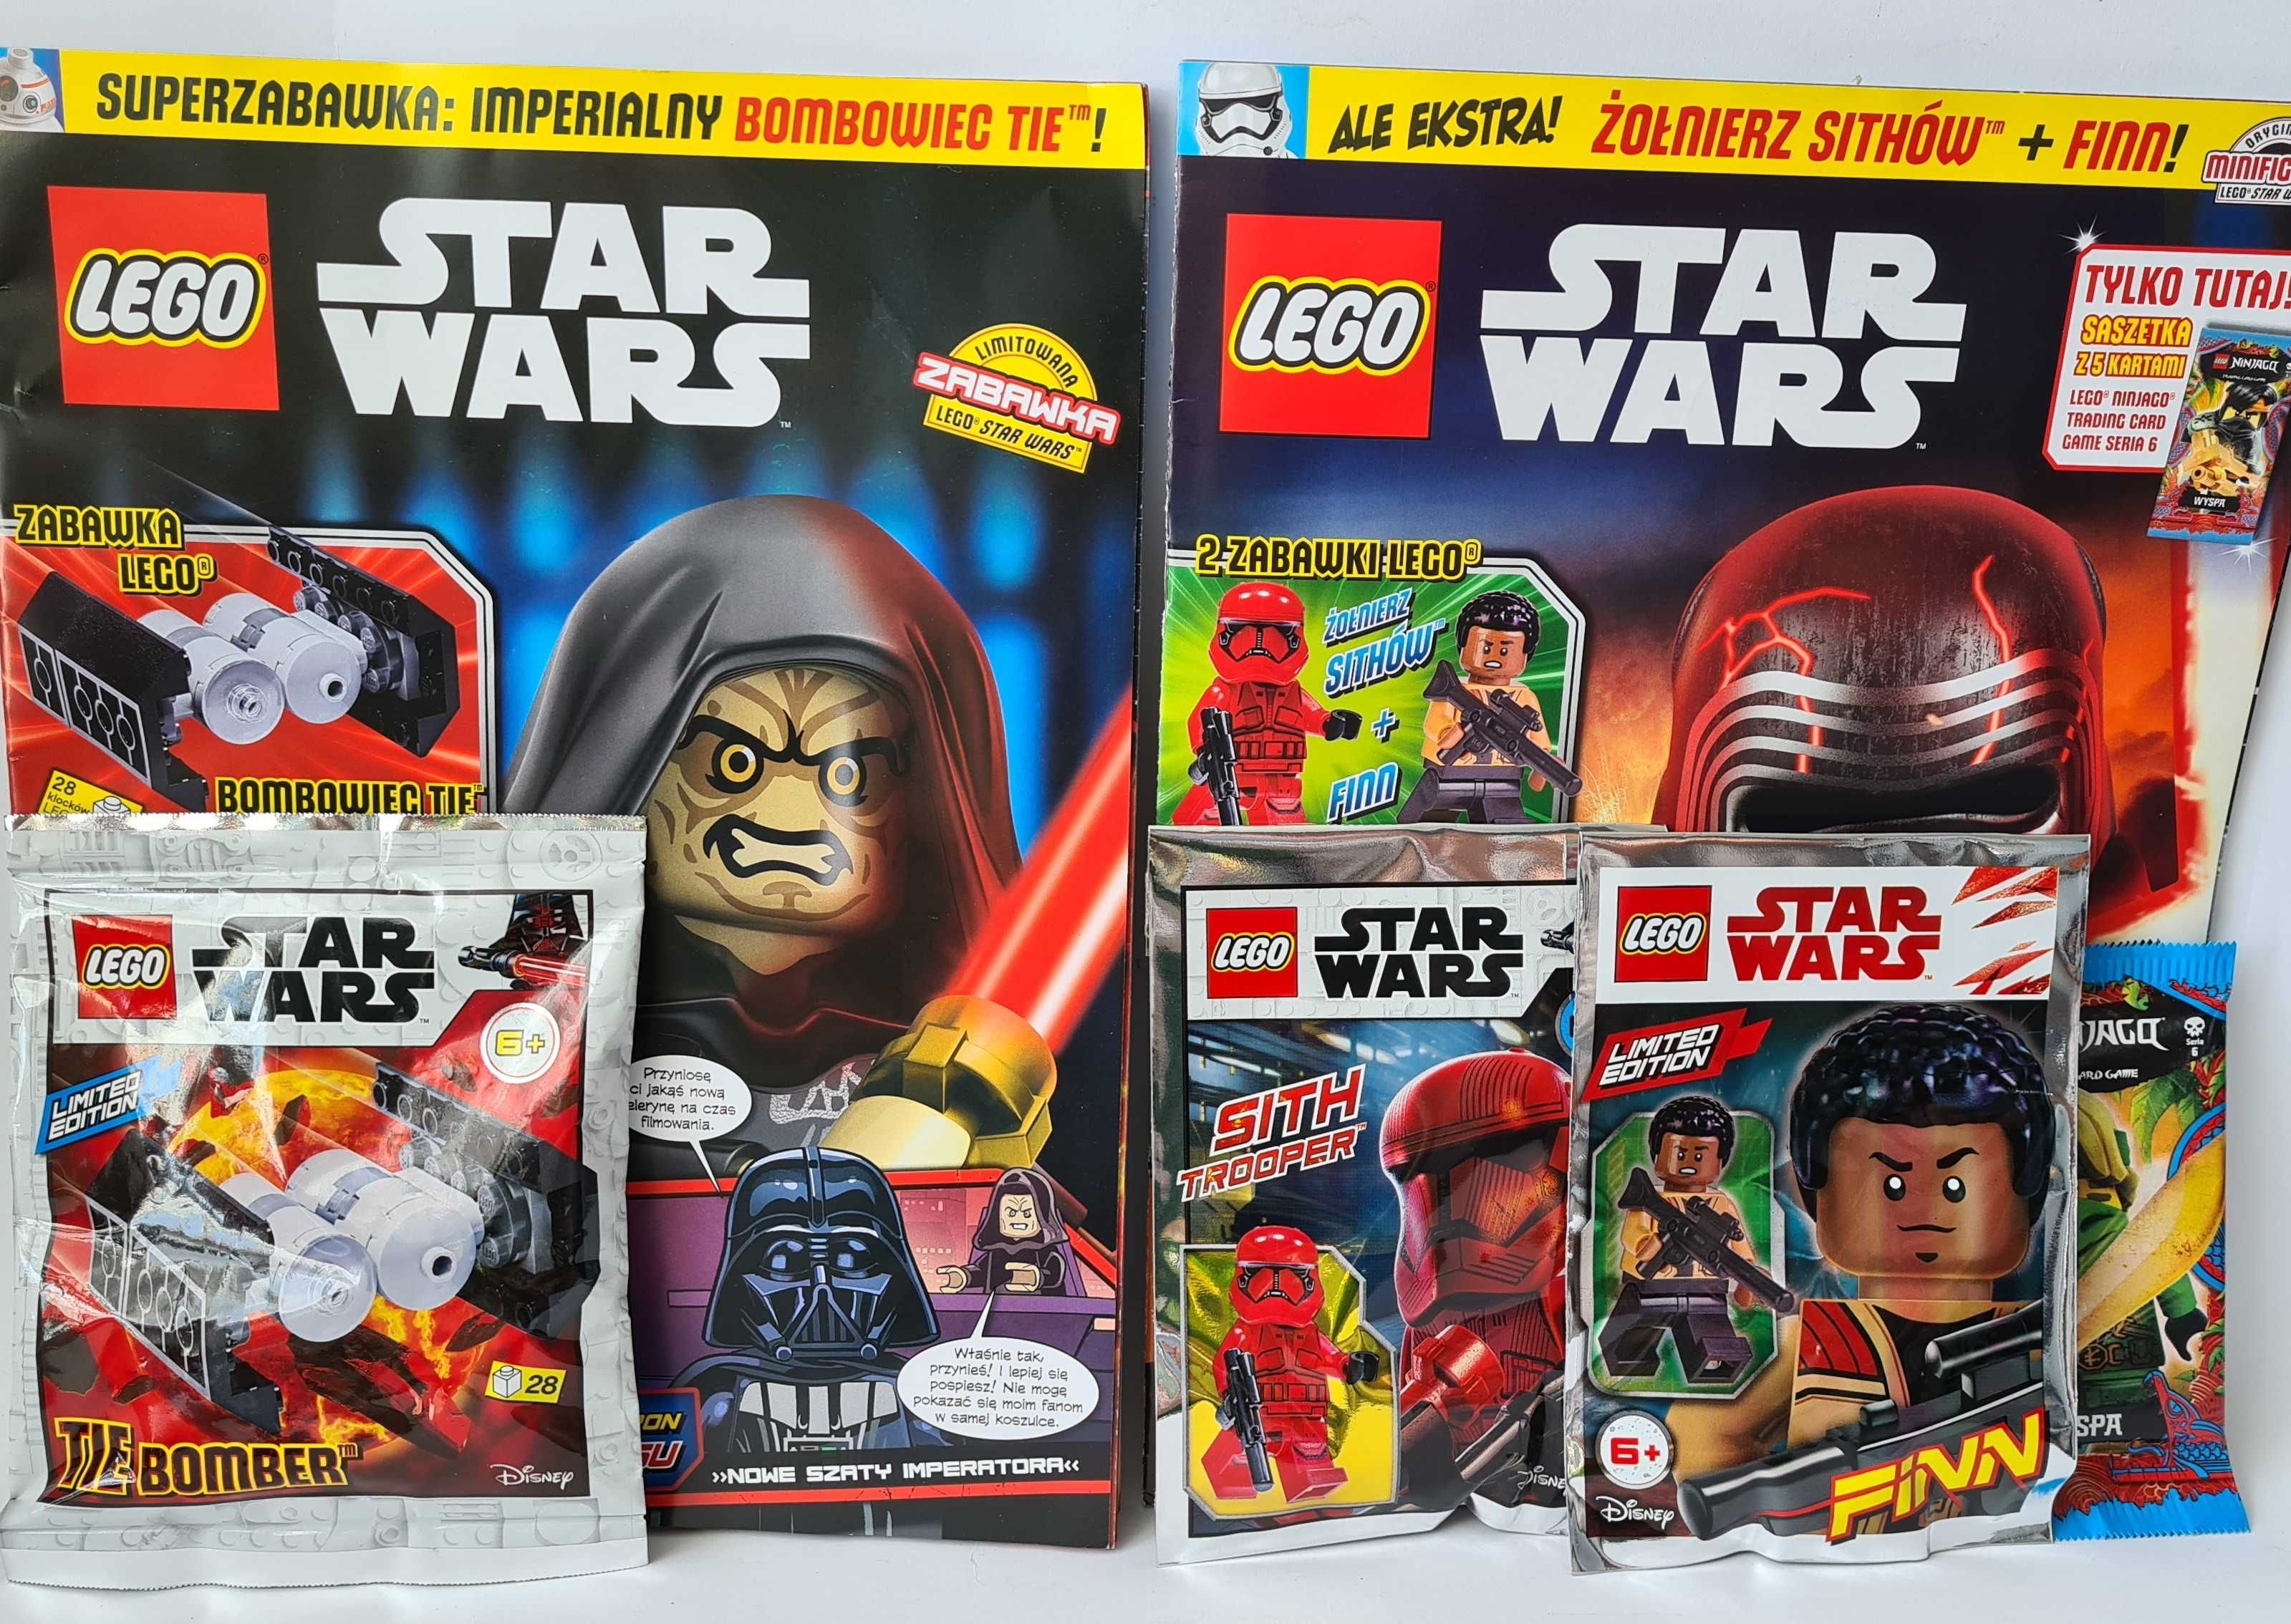 2 magazyny STAR WARS Lego 3 FIGURKI FINN, SITH TROOPER Tie bomber